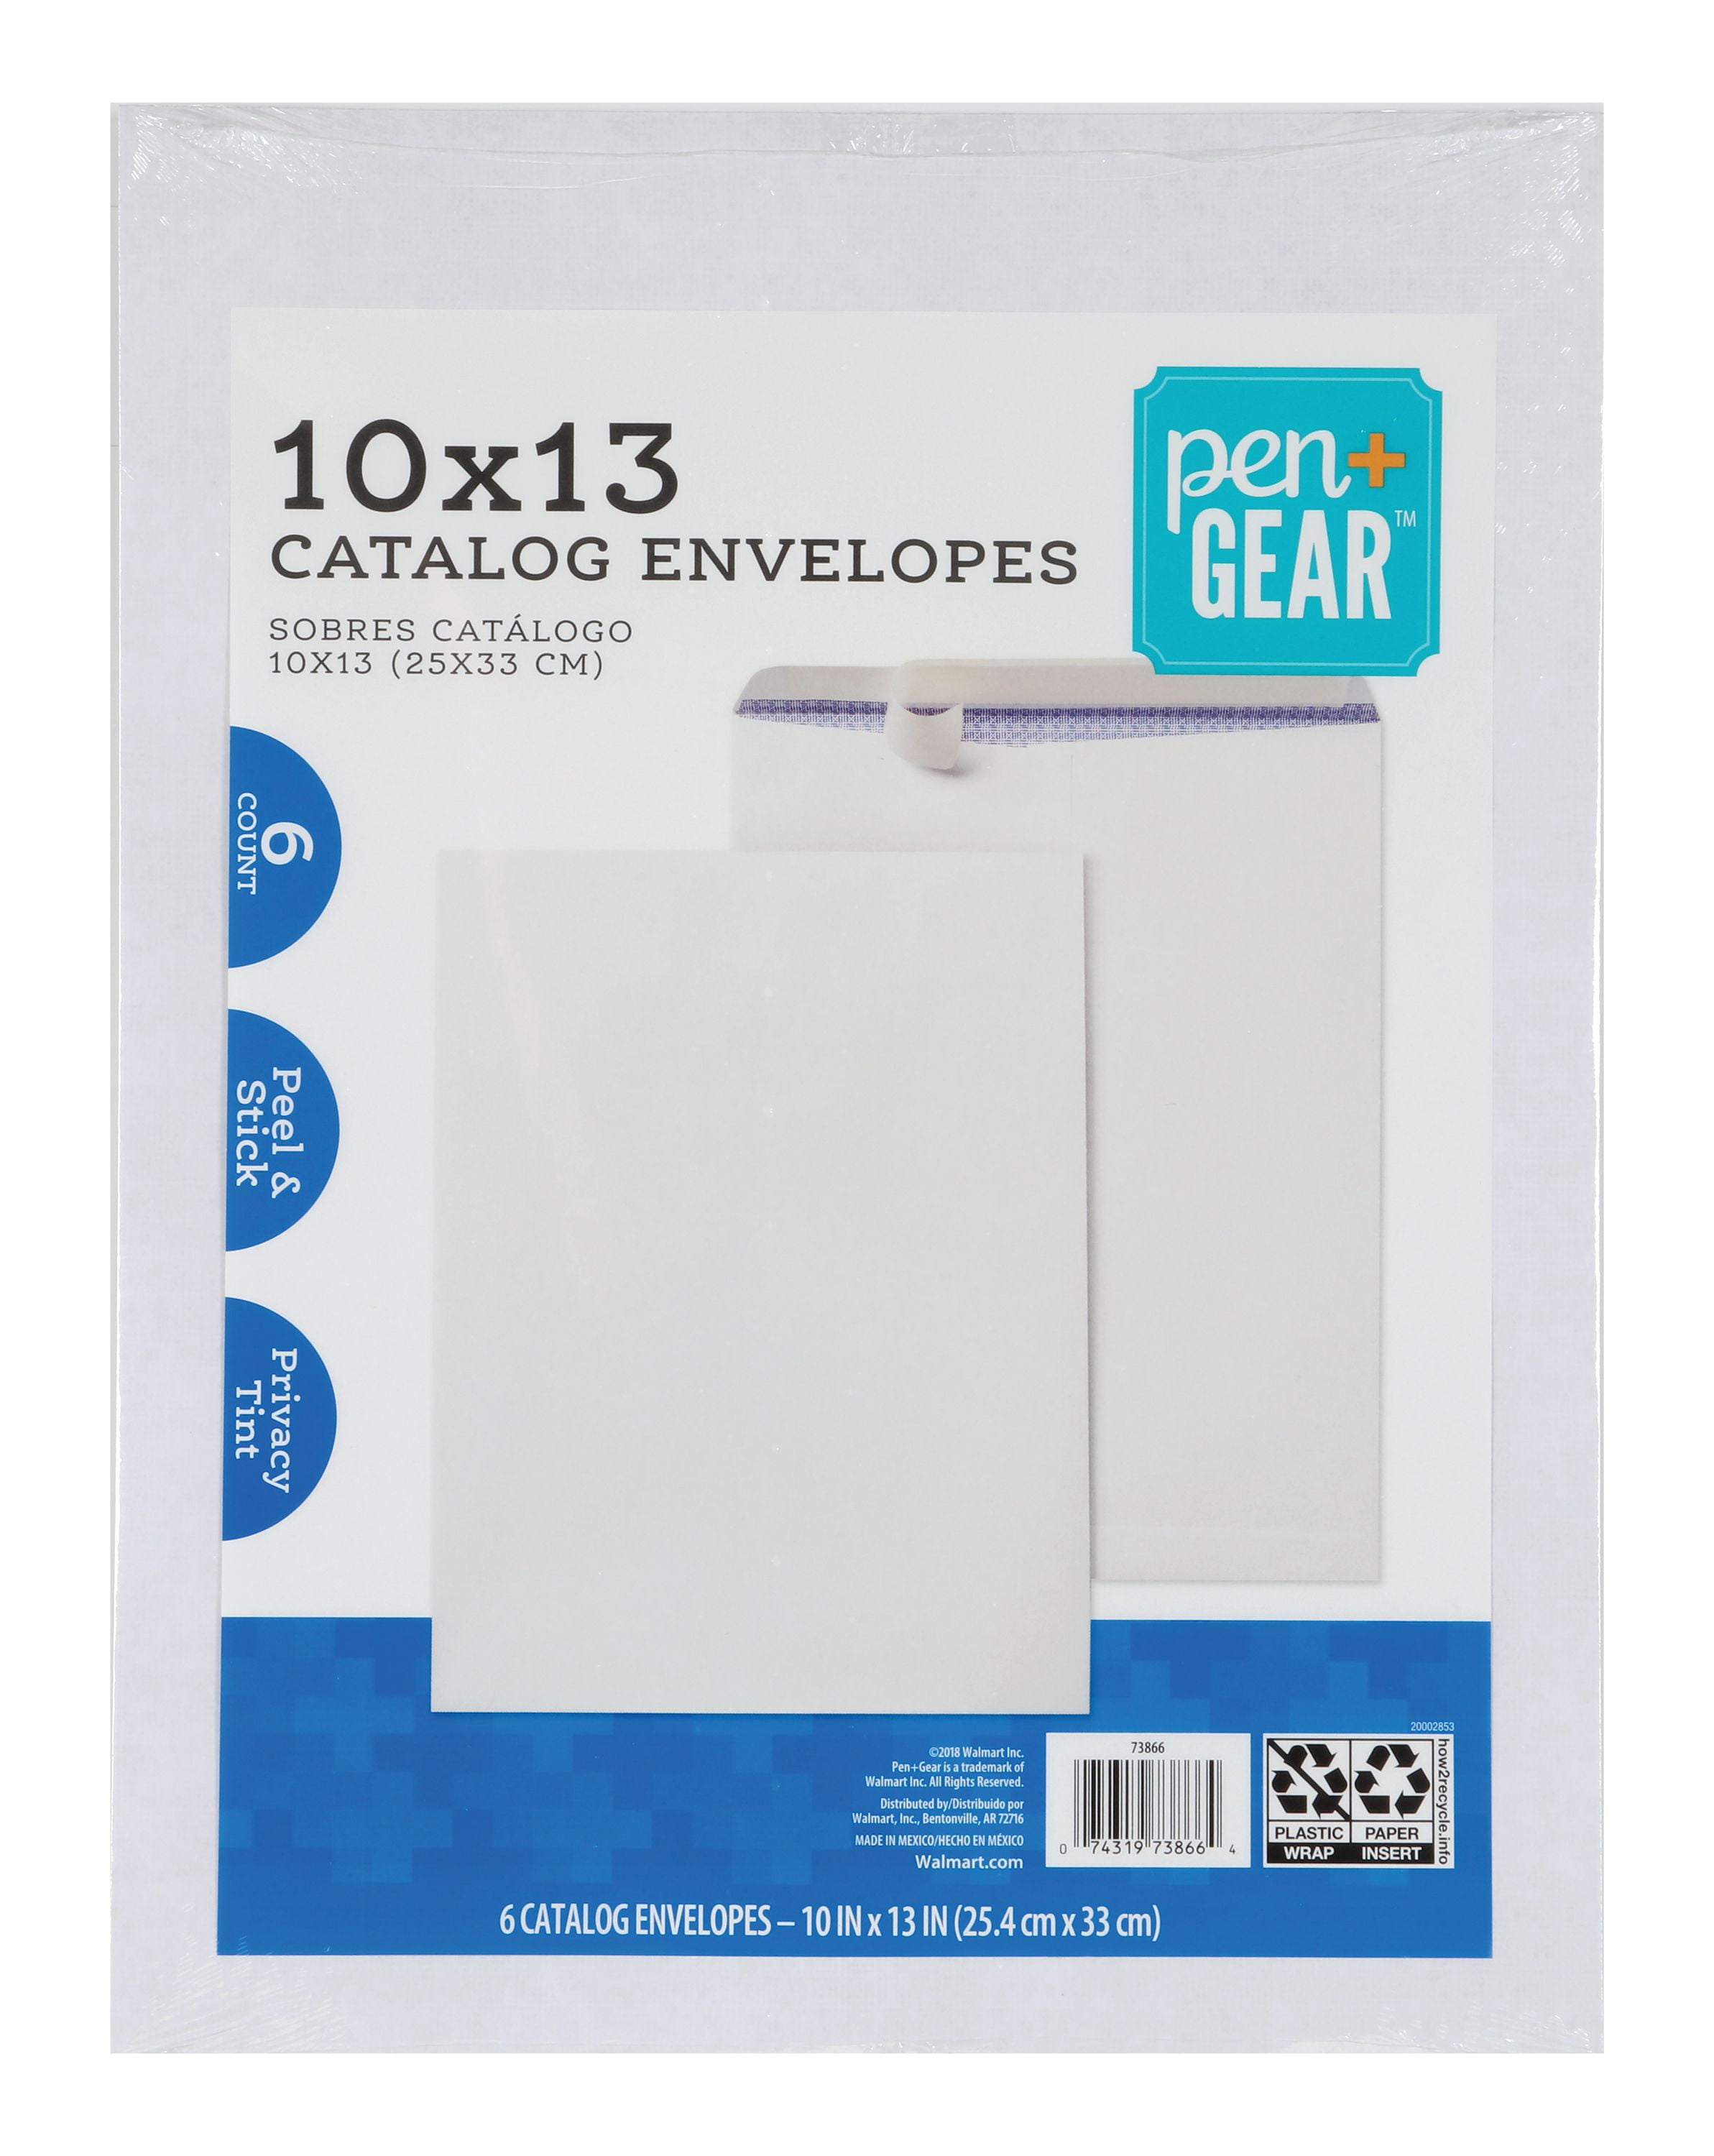 Carte Et Enveloppe, 13,5x13,5 cm, 14,5x14,5 cm, Blanc, 5 Set, 1 Pq